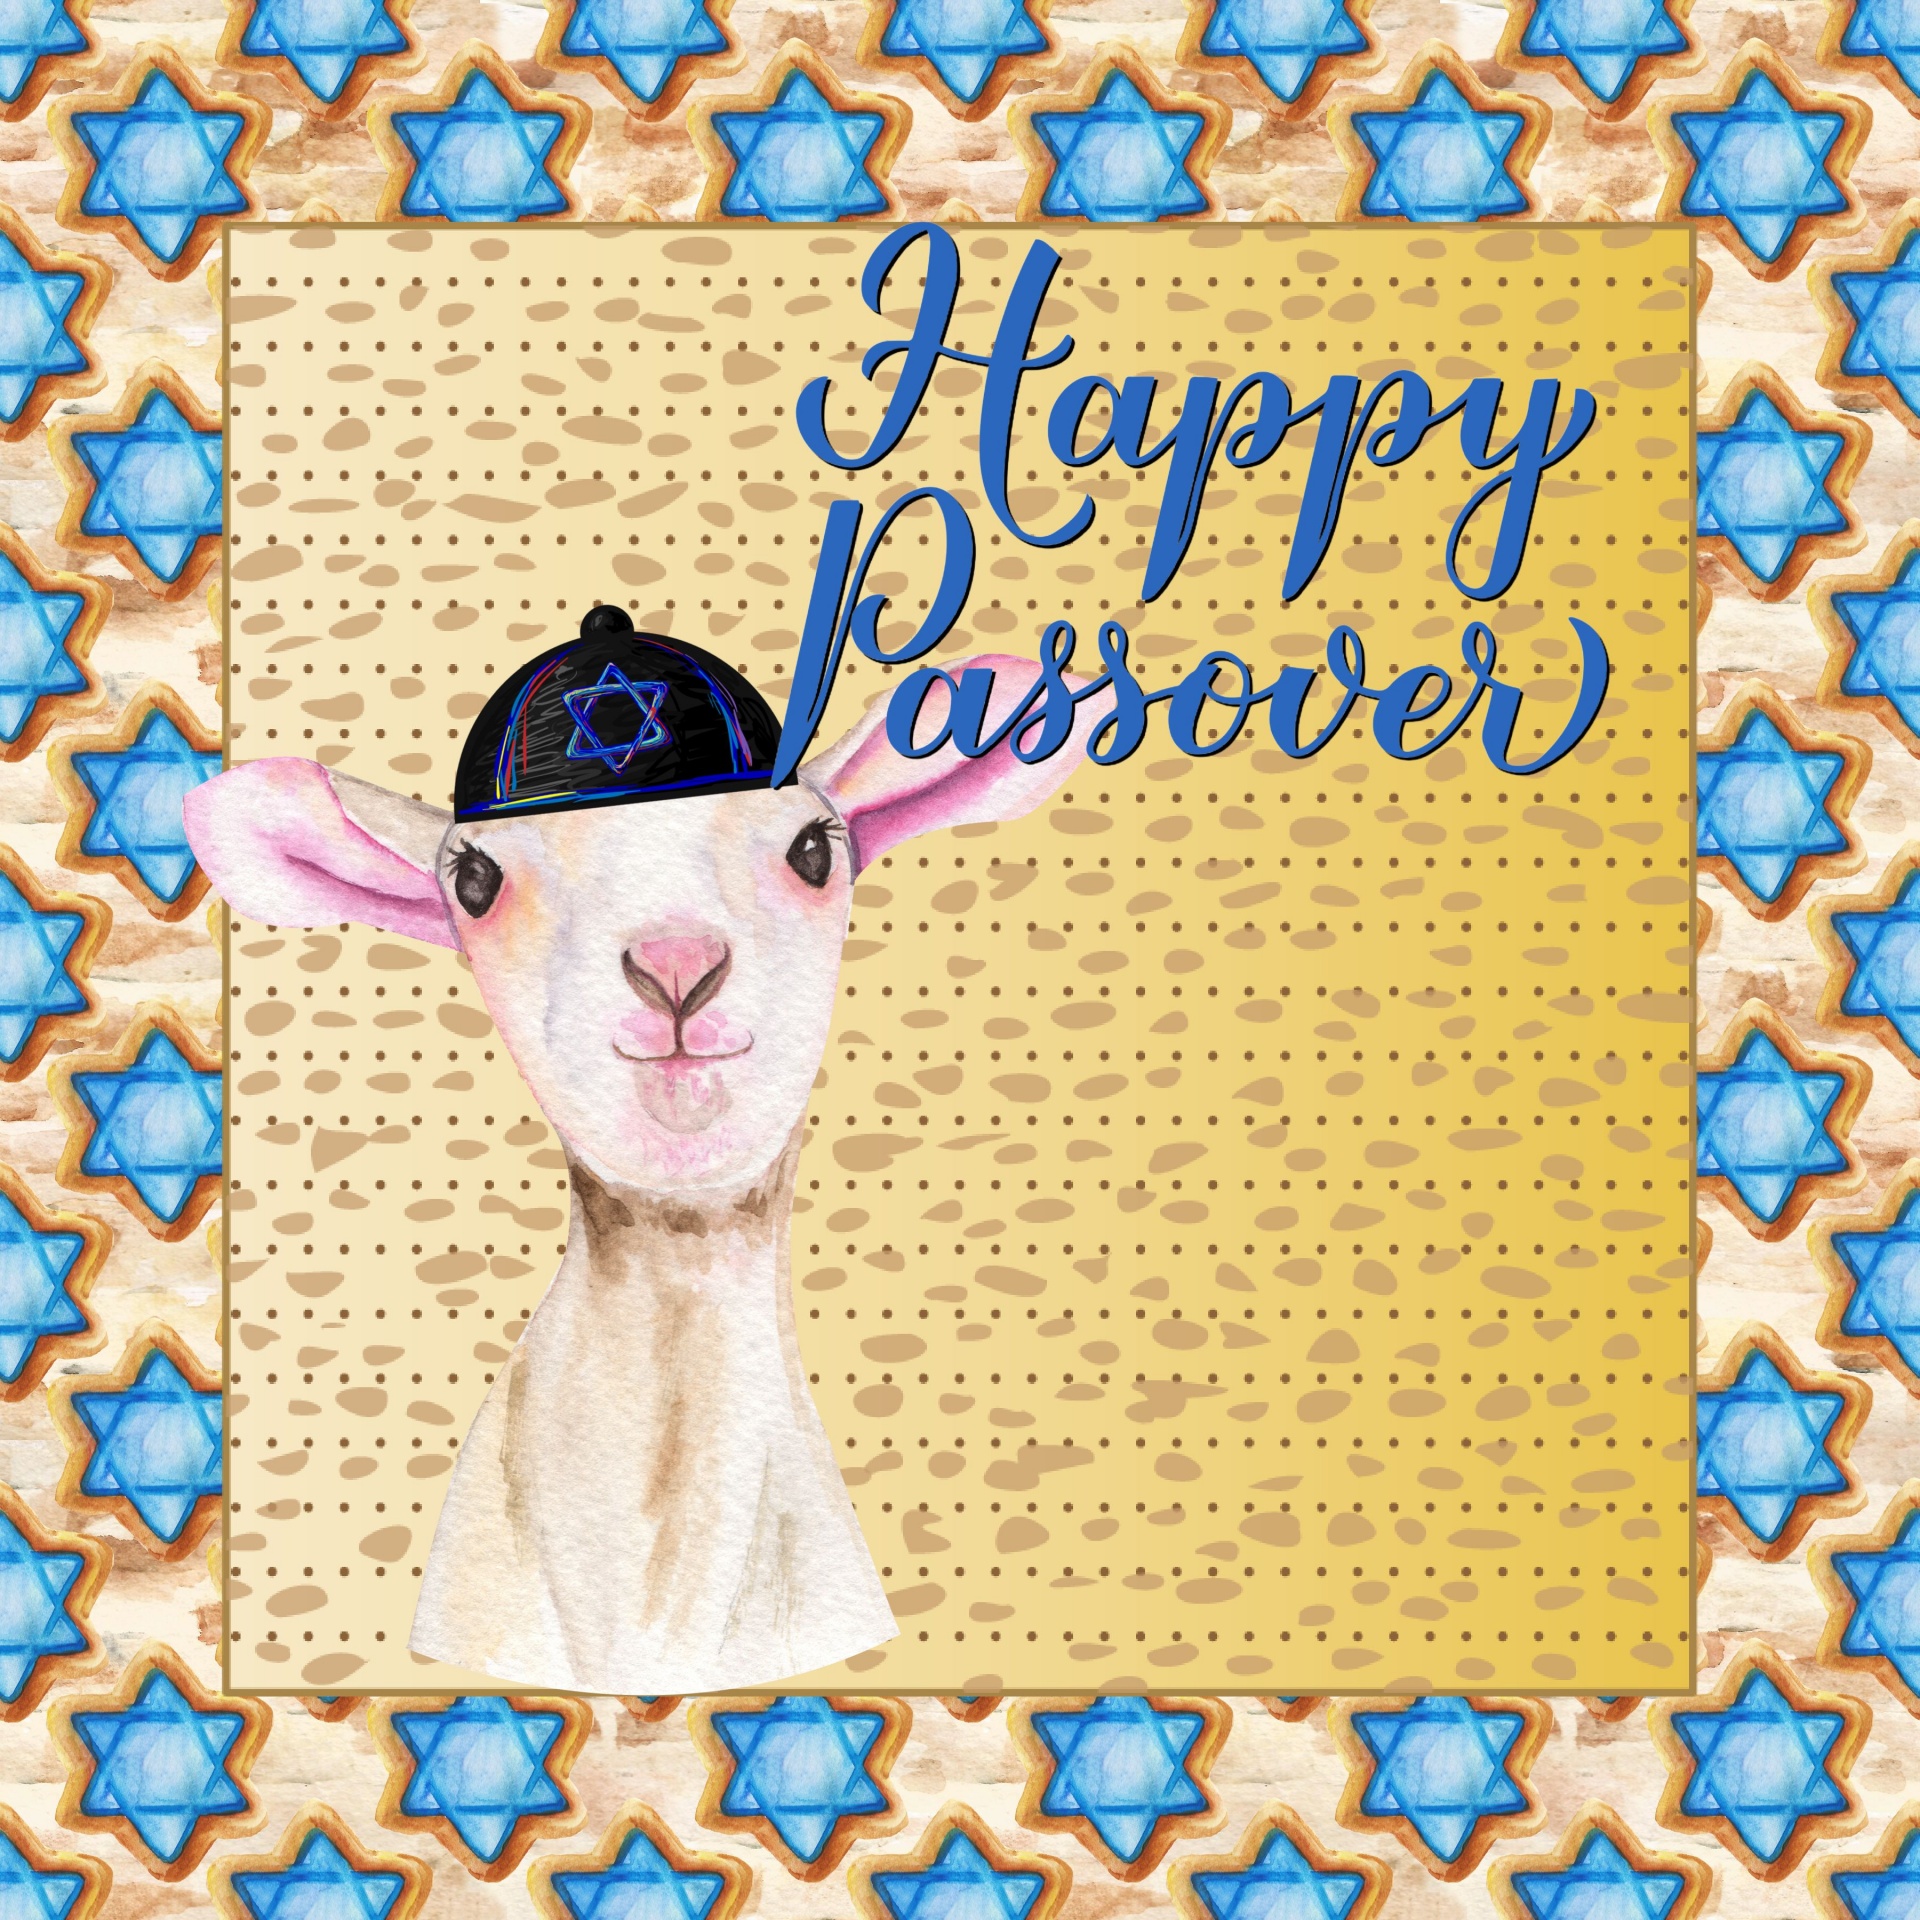 Happy Passover Lamb Greeting